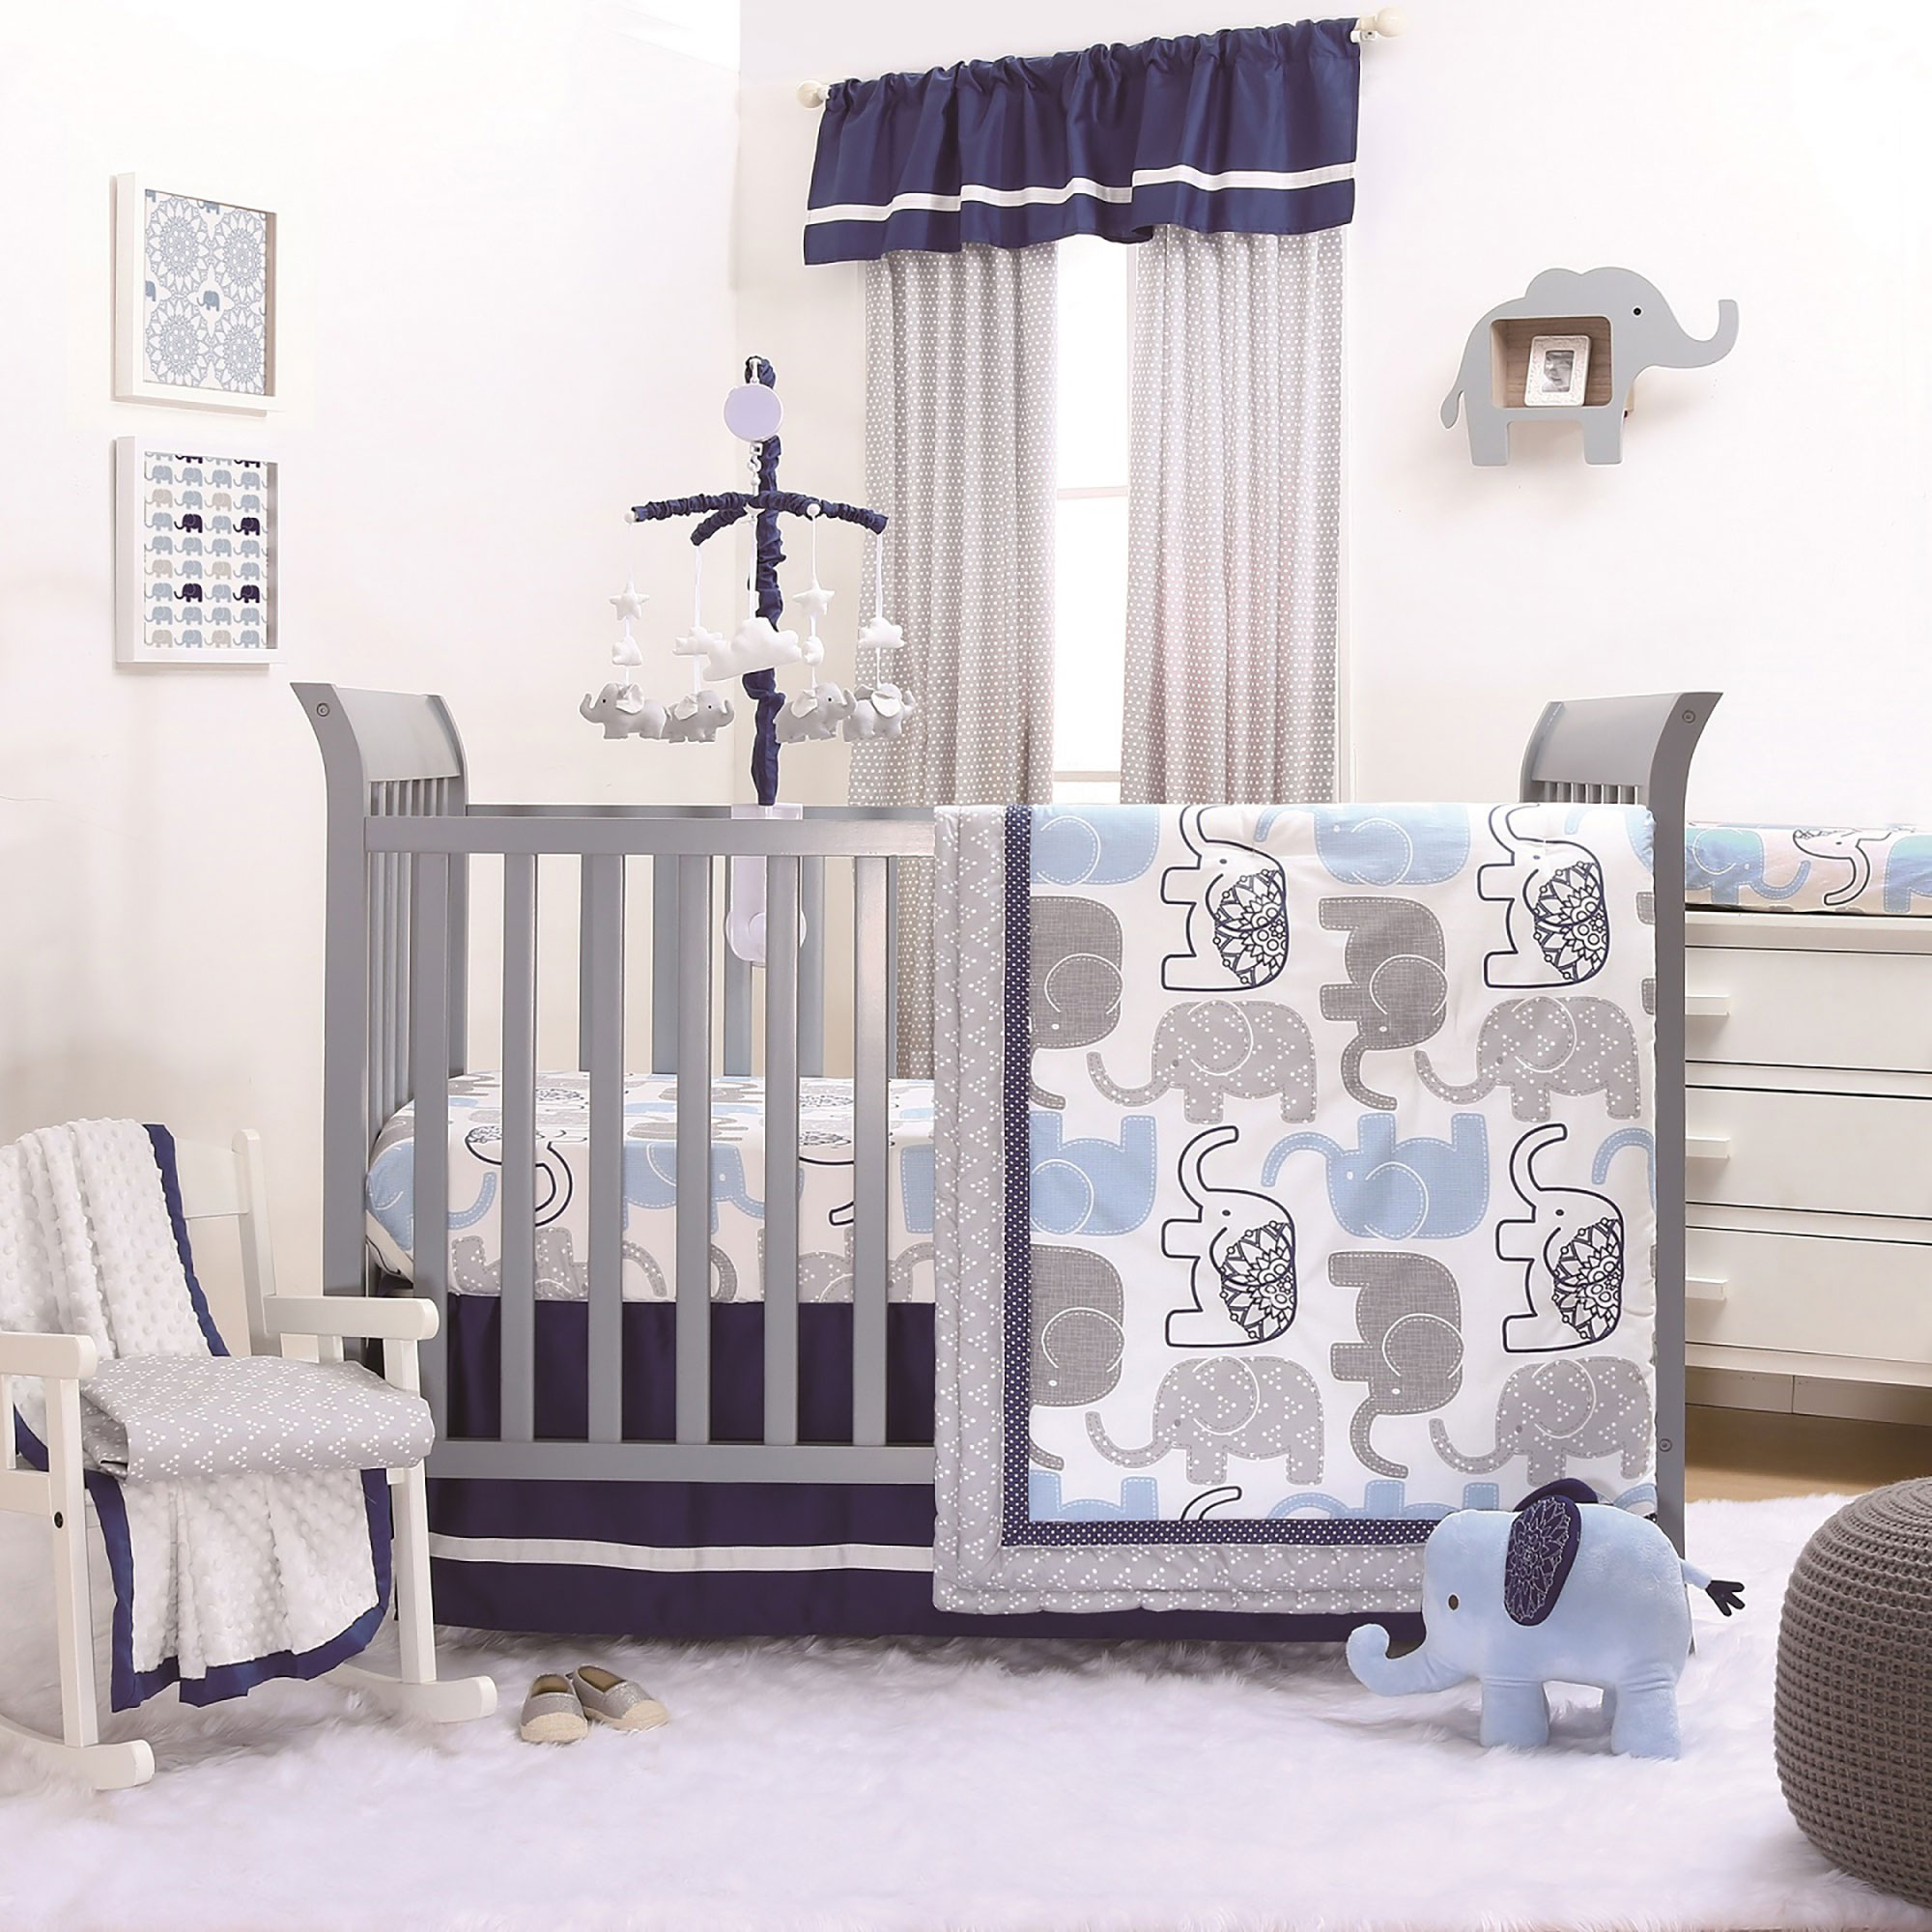 How to Choose Baby Boy Crib Bedding Sets